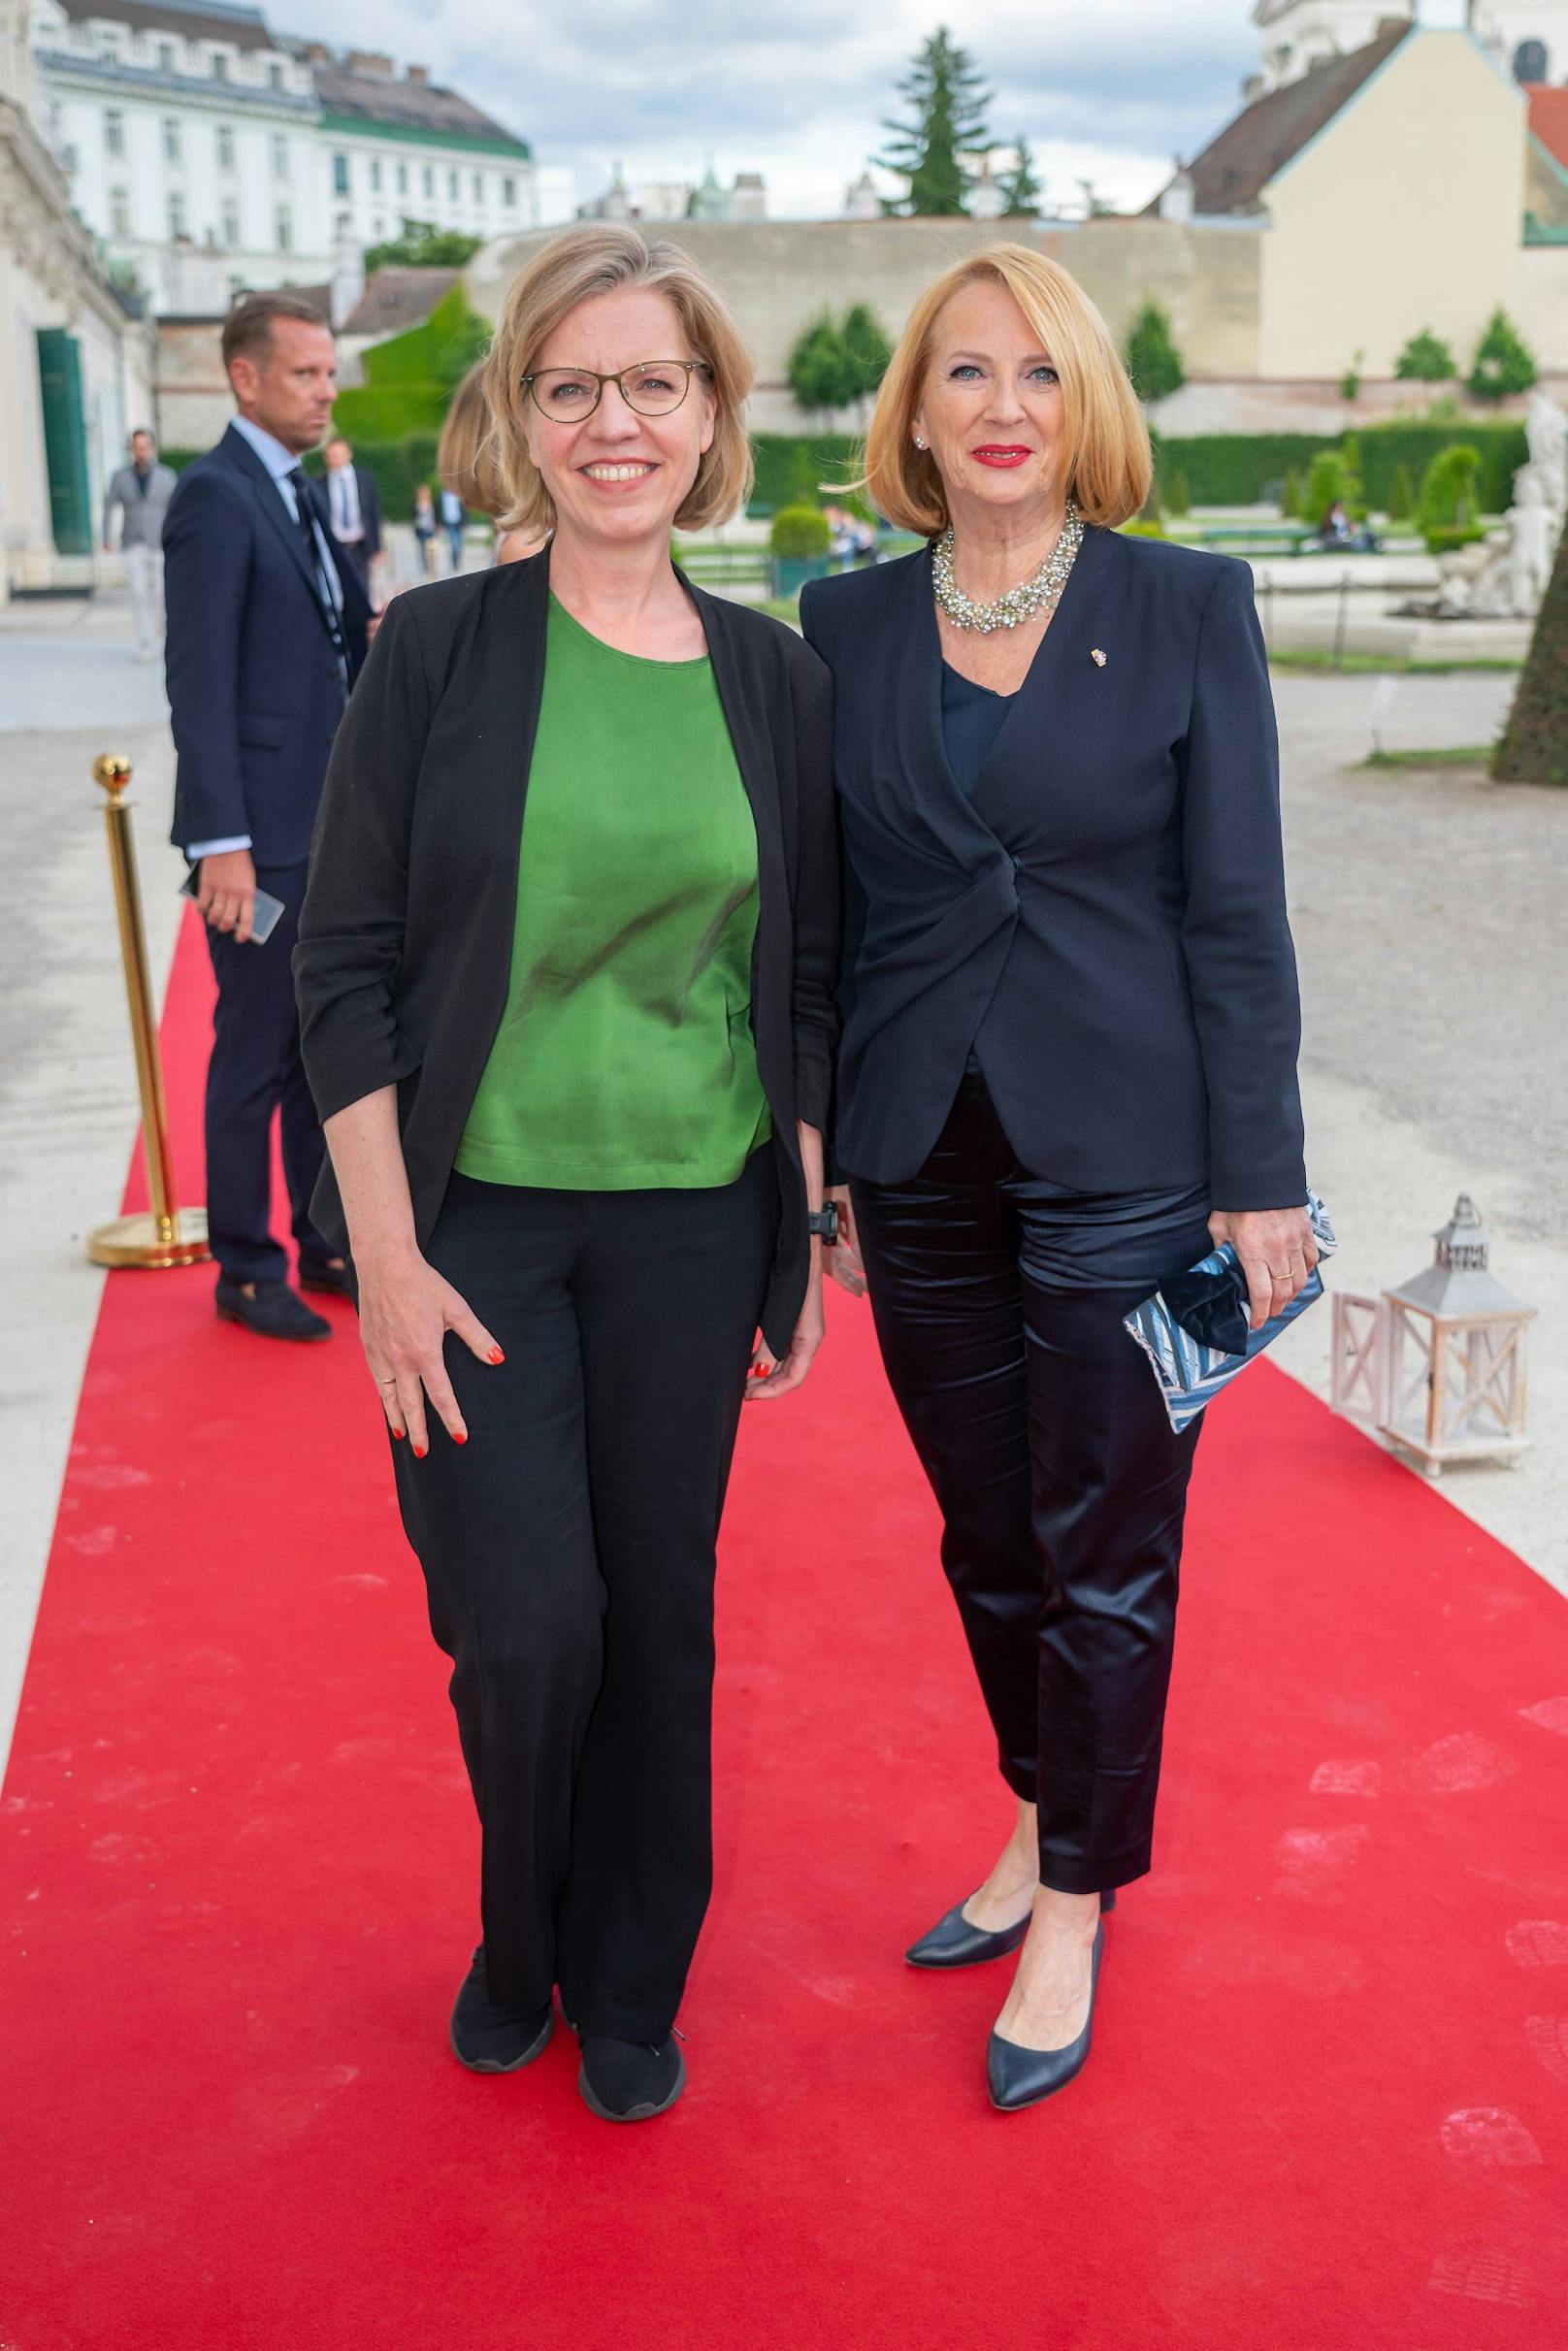 Umweltministerin Leonore Gewessler mit der ersten Frau im Staat, Doris Bures